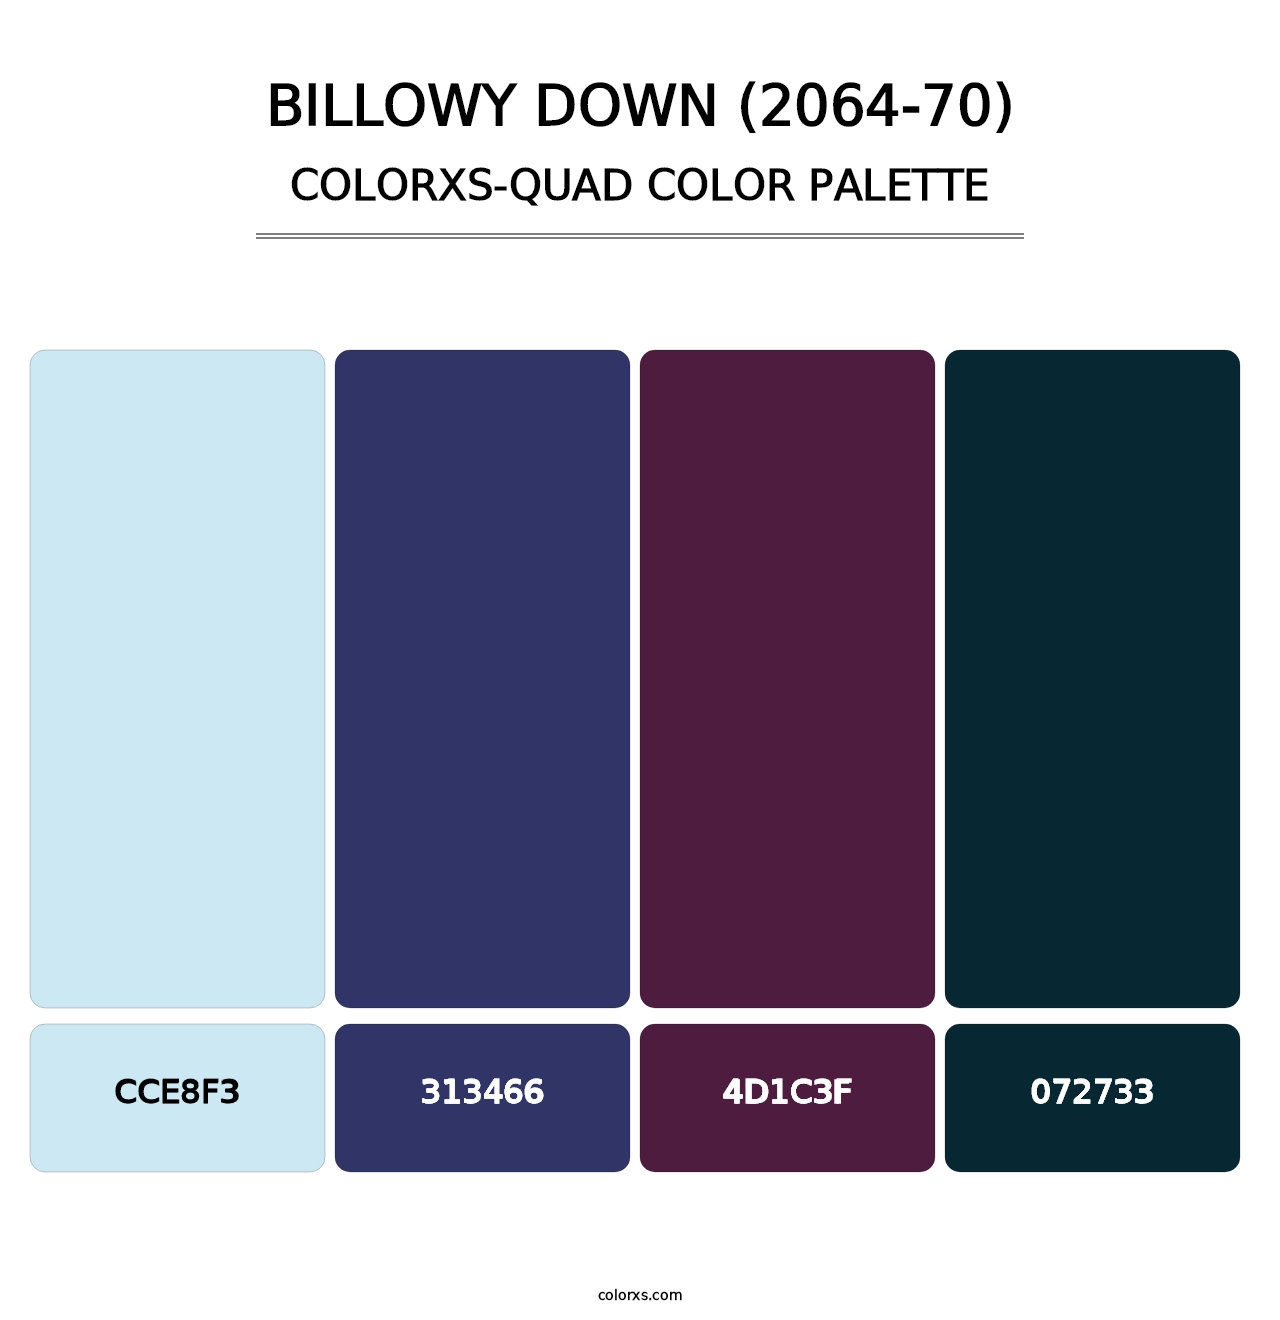 Billowy Down (2064-70) - Colorxs Quad Palette